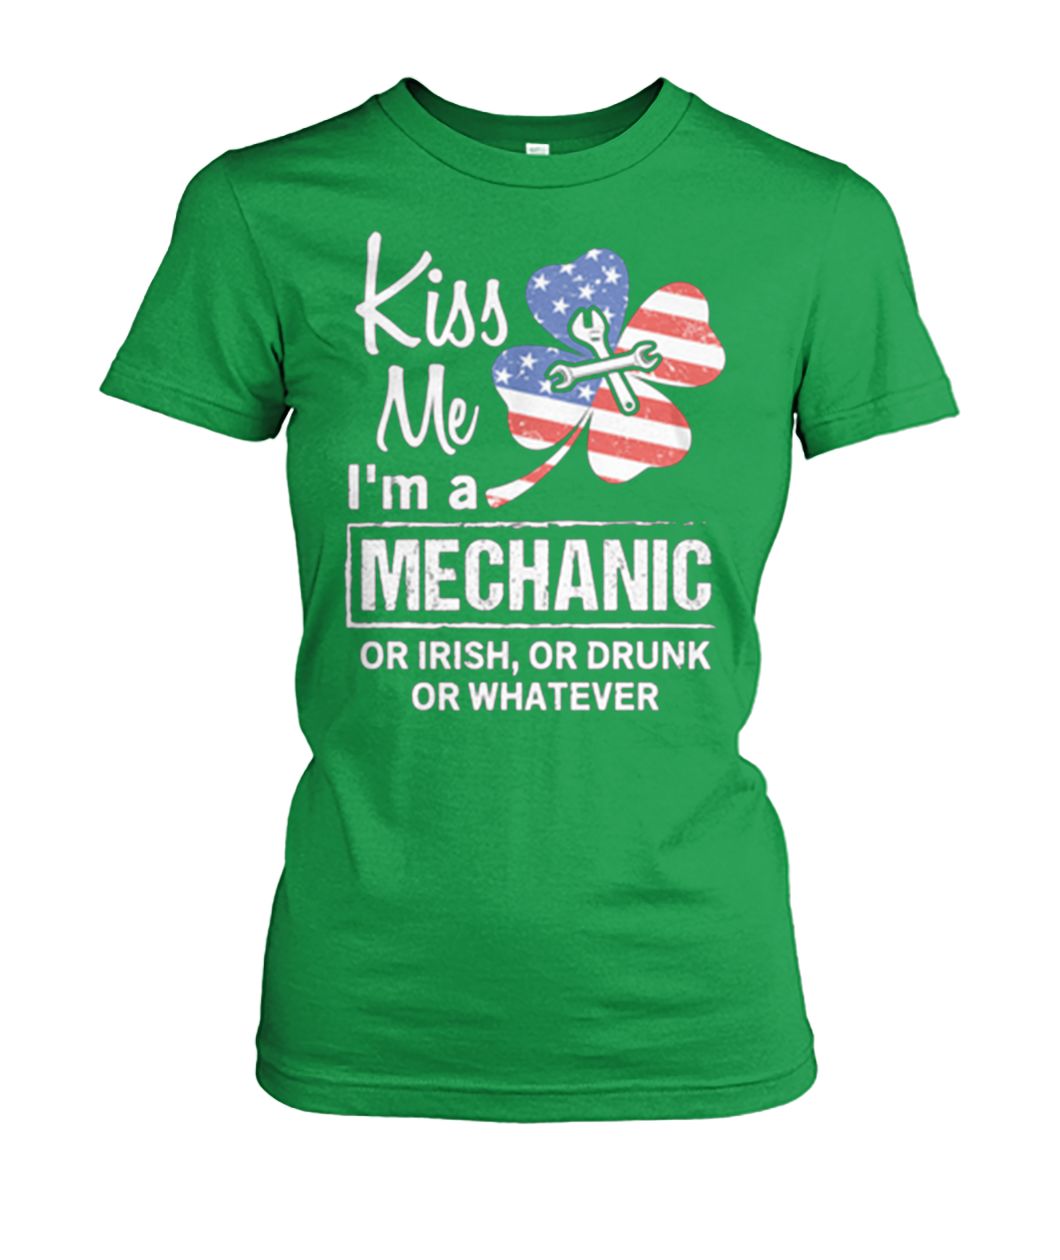 Kiss me I'm a mechanic irish st patrick's day women's crew tee